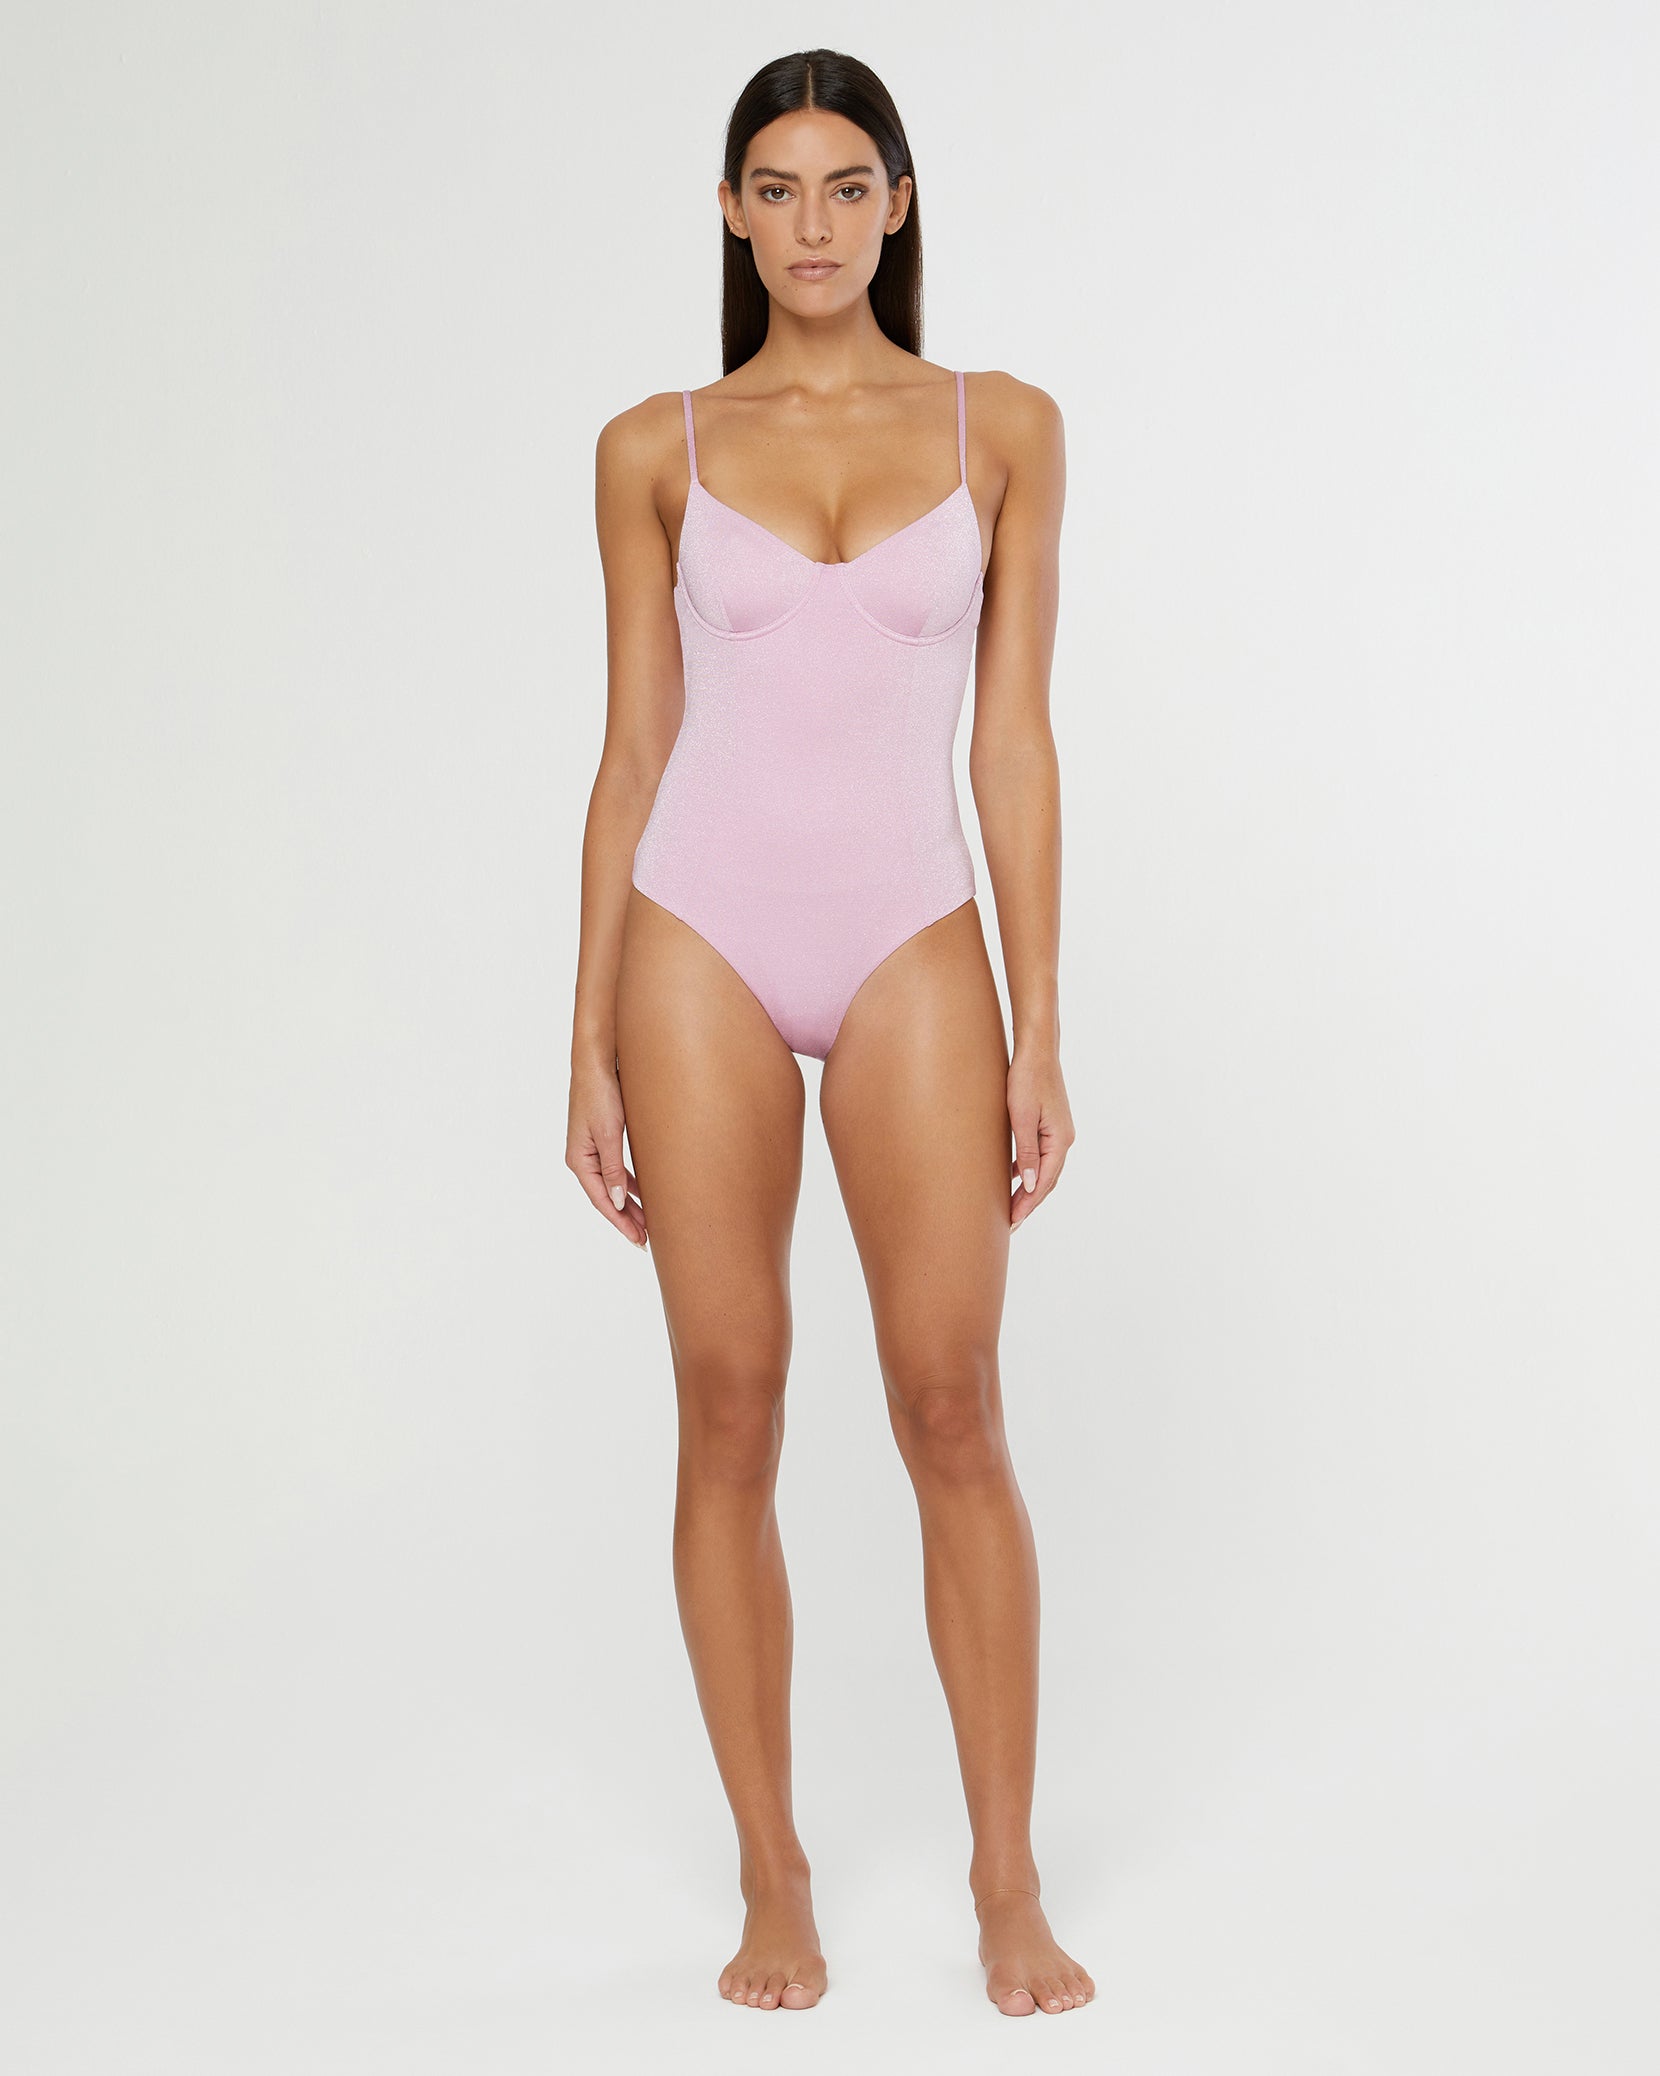 LYSEACIA High Cut Bodysuit Swimwear Women Sexy Long Sleeve One